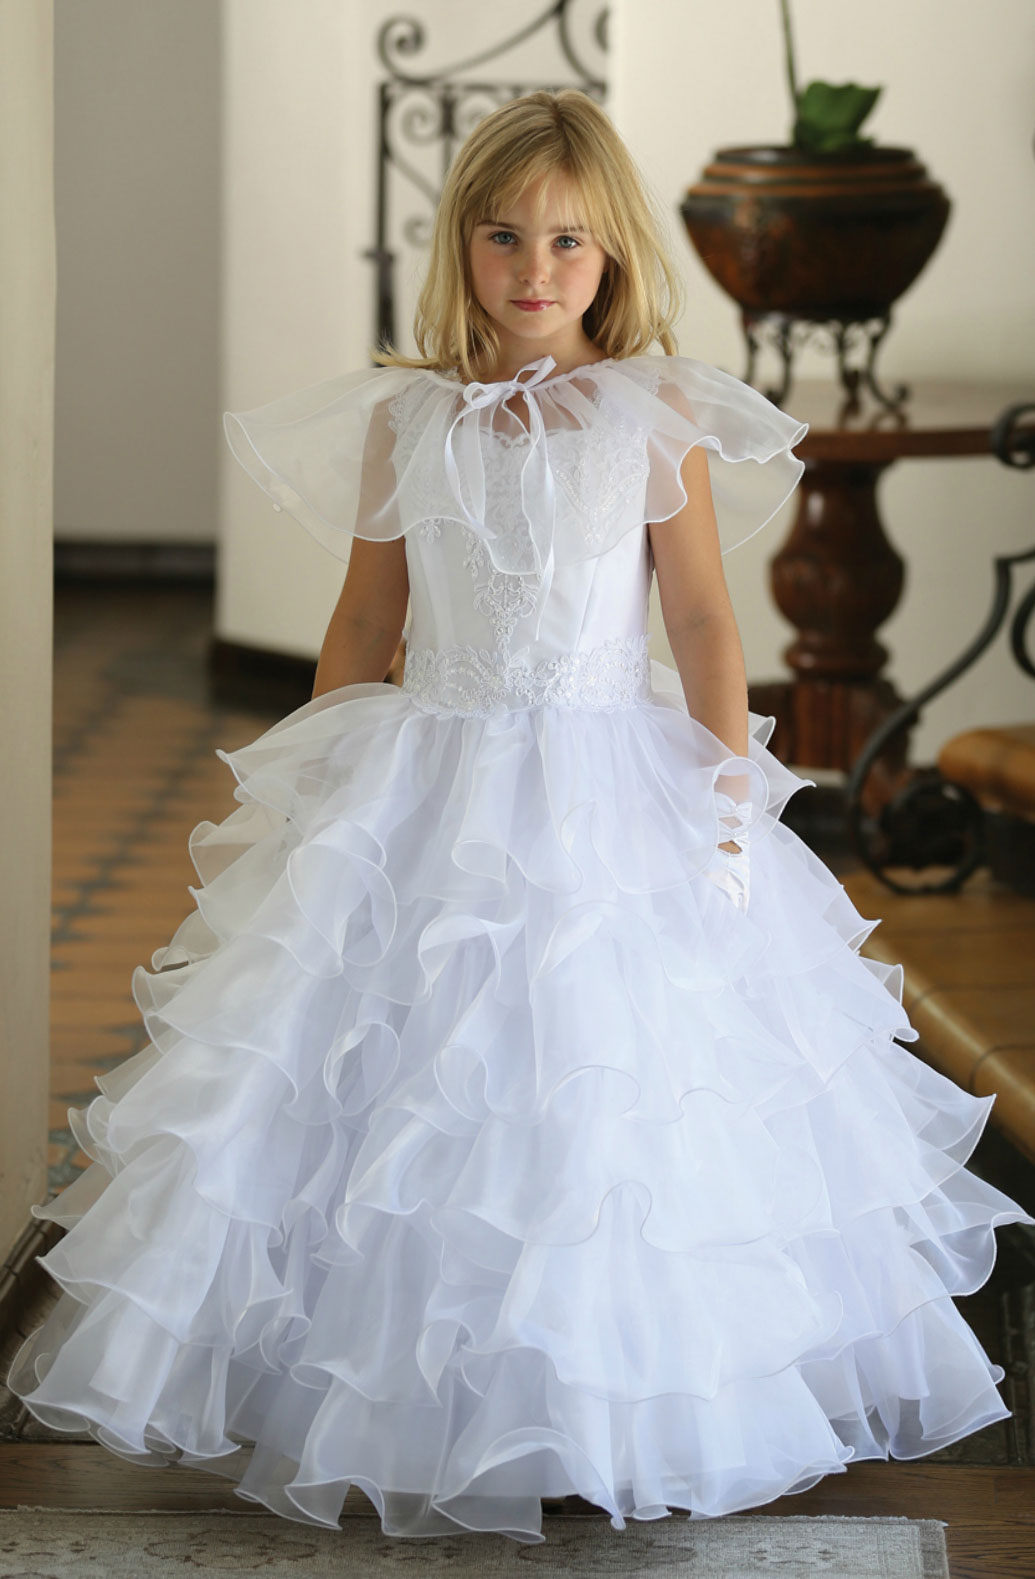 AG_DR1710 - Girls Dress Style DR1710 - WHITE Satin Dress with Multi